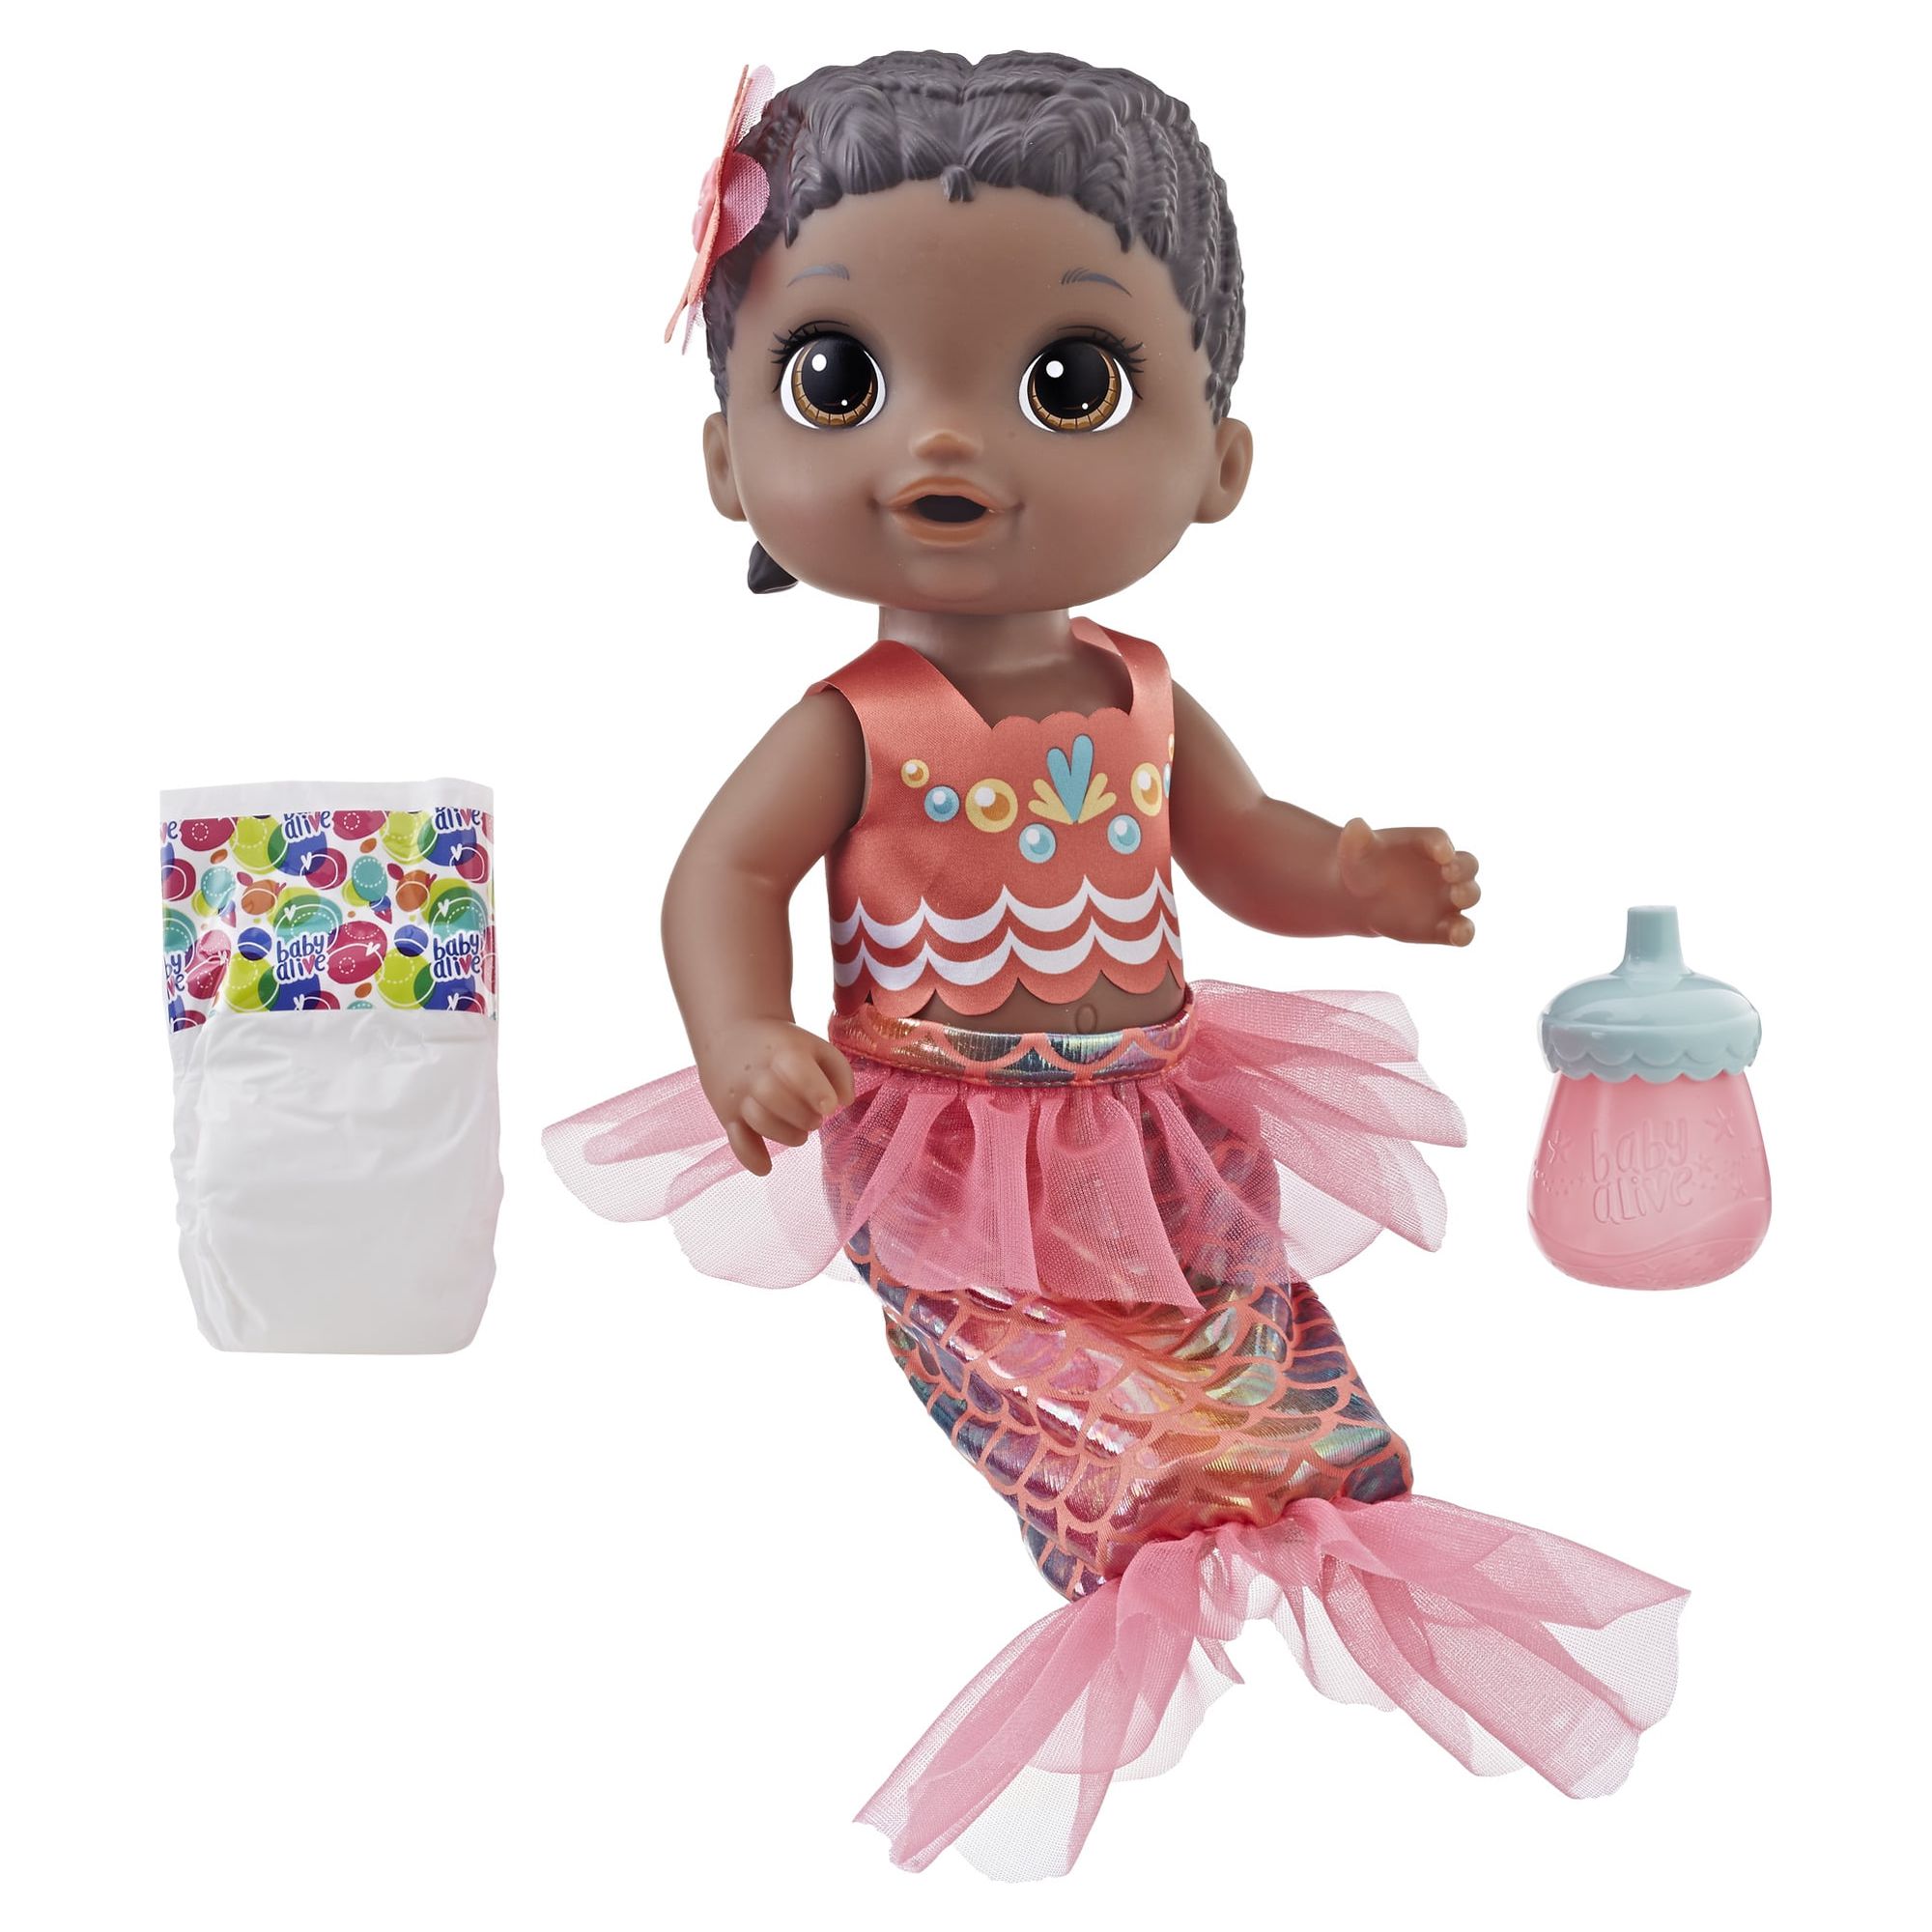 Baby Alive: Shimmer 'n Splash Mermaid 14-Inch Doll Black Hair, Brown Eyes Kids Toy for Boys and Girls - image 1 of 14